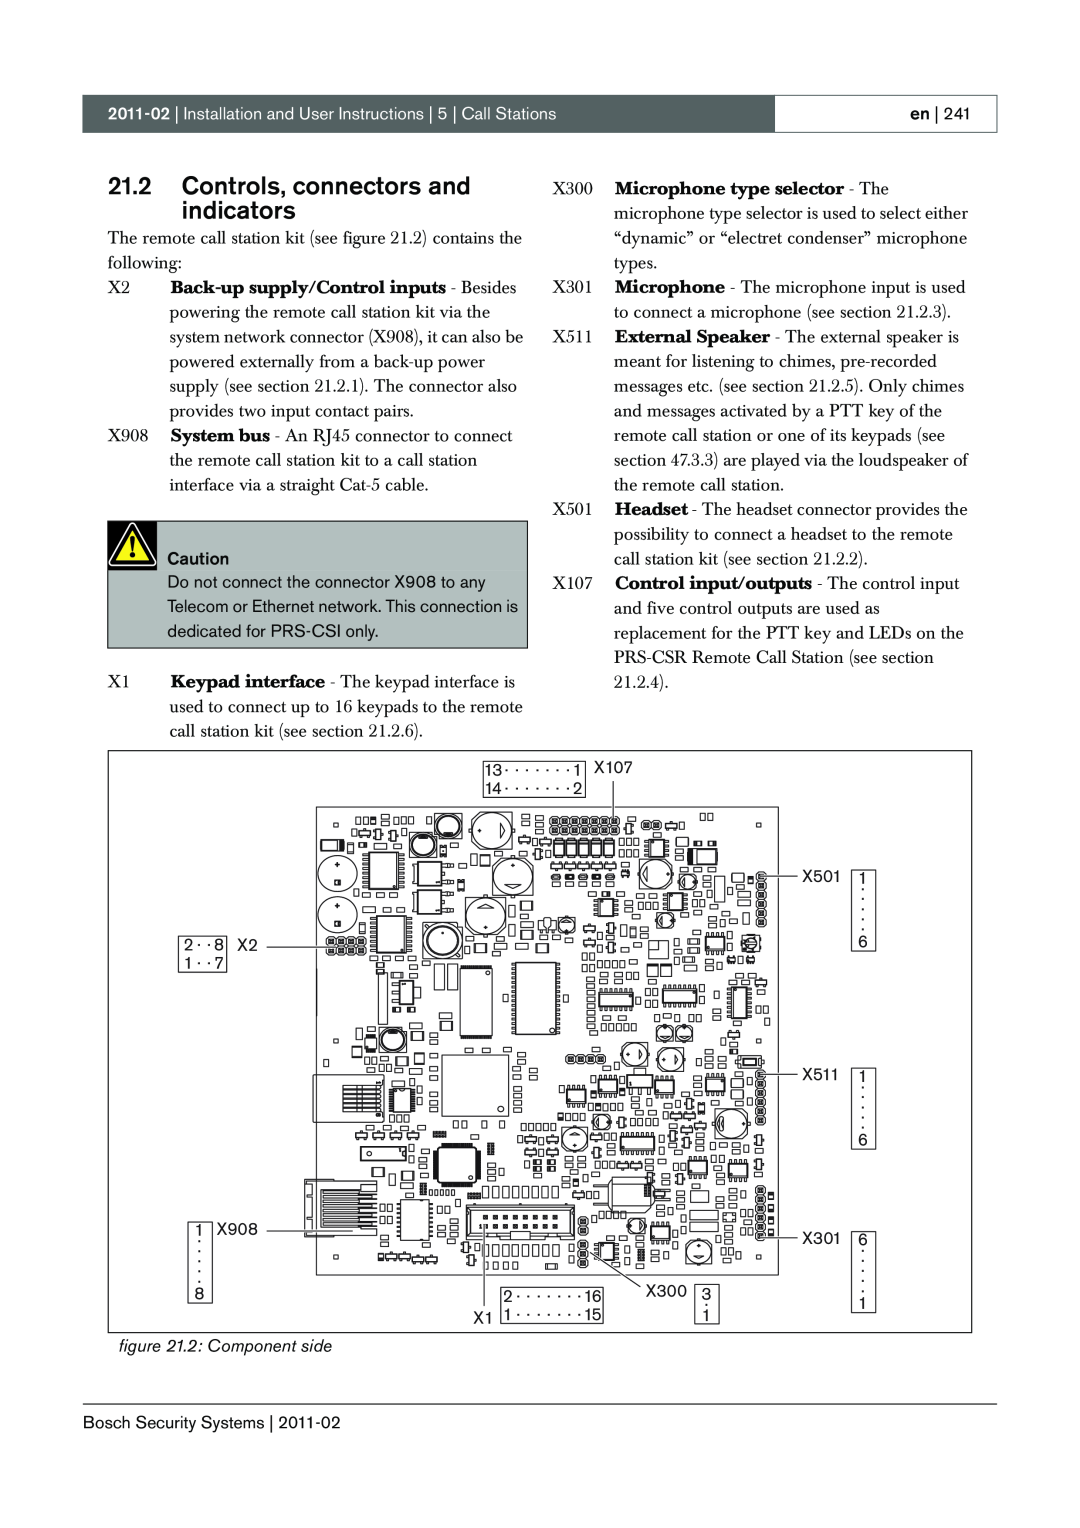 Bosch Appliances 3.5 manual 21.2Controls, connectors and indicators, 2: Component side 